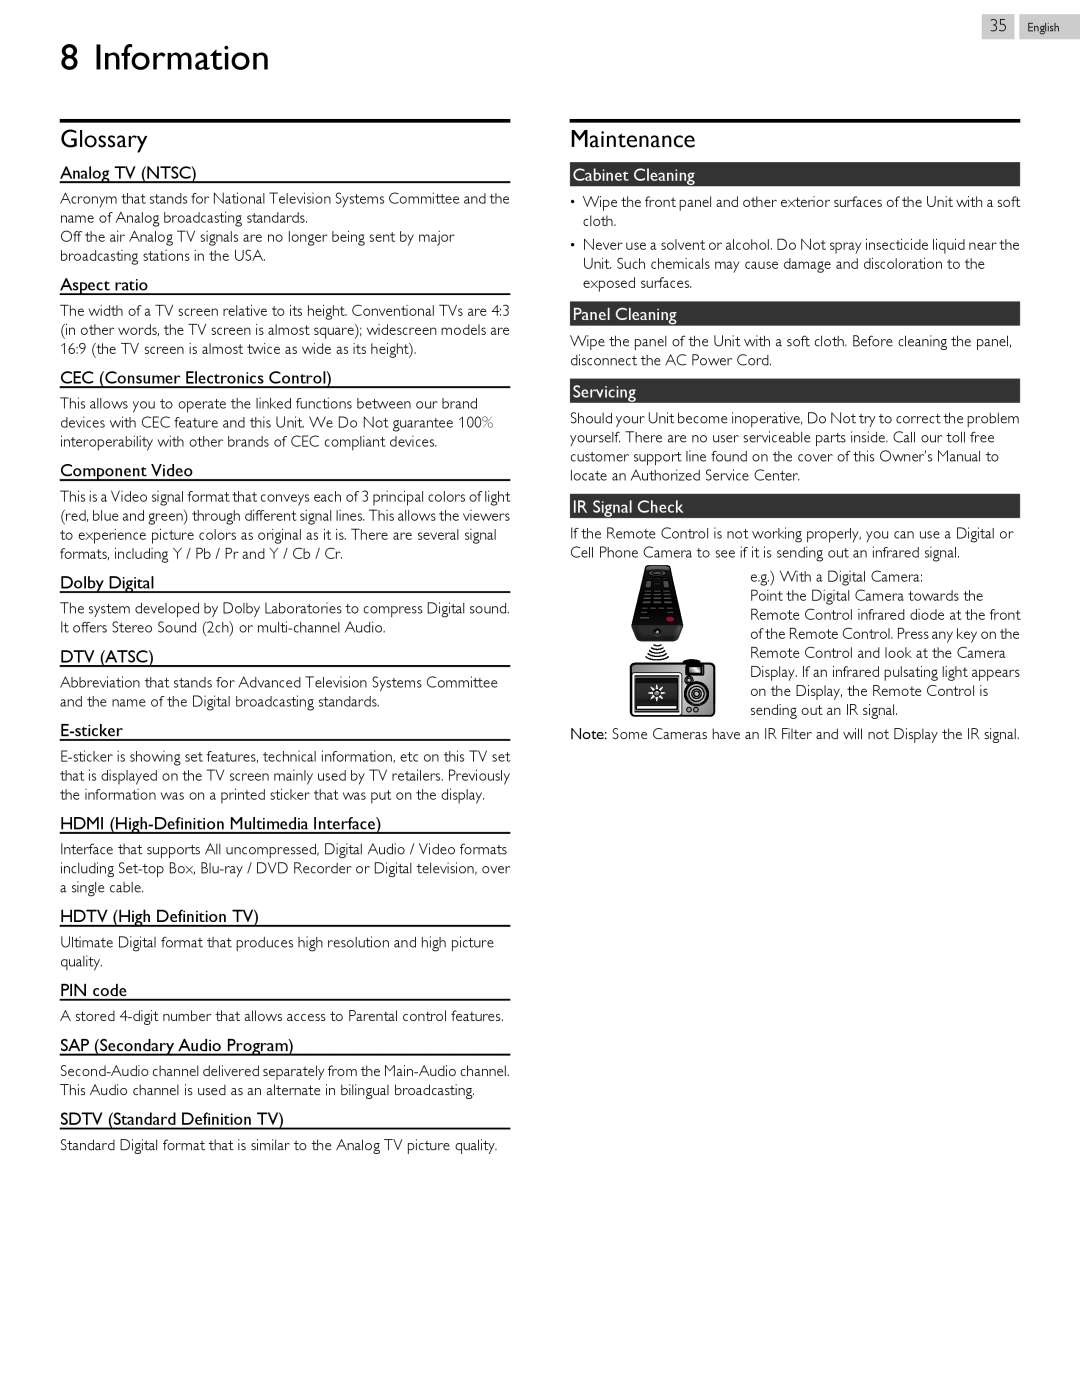 Magnavox 46ME313V/F7 A, 50ME313V/F7 A owner manual Information, Glossary, Maintenance 